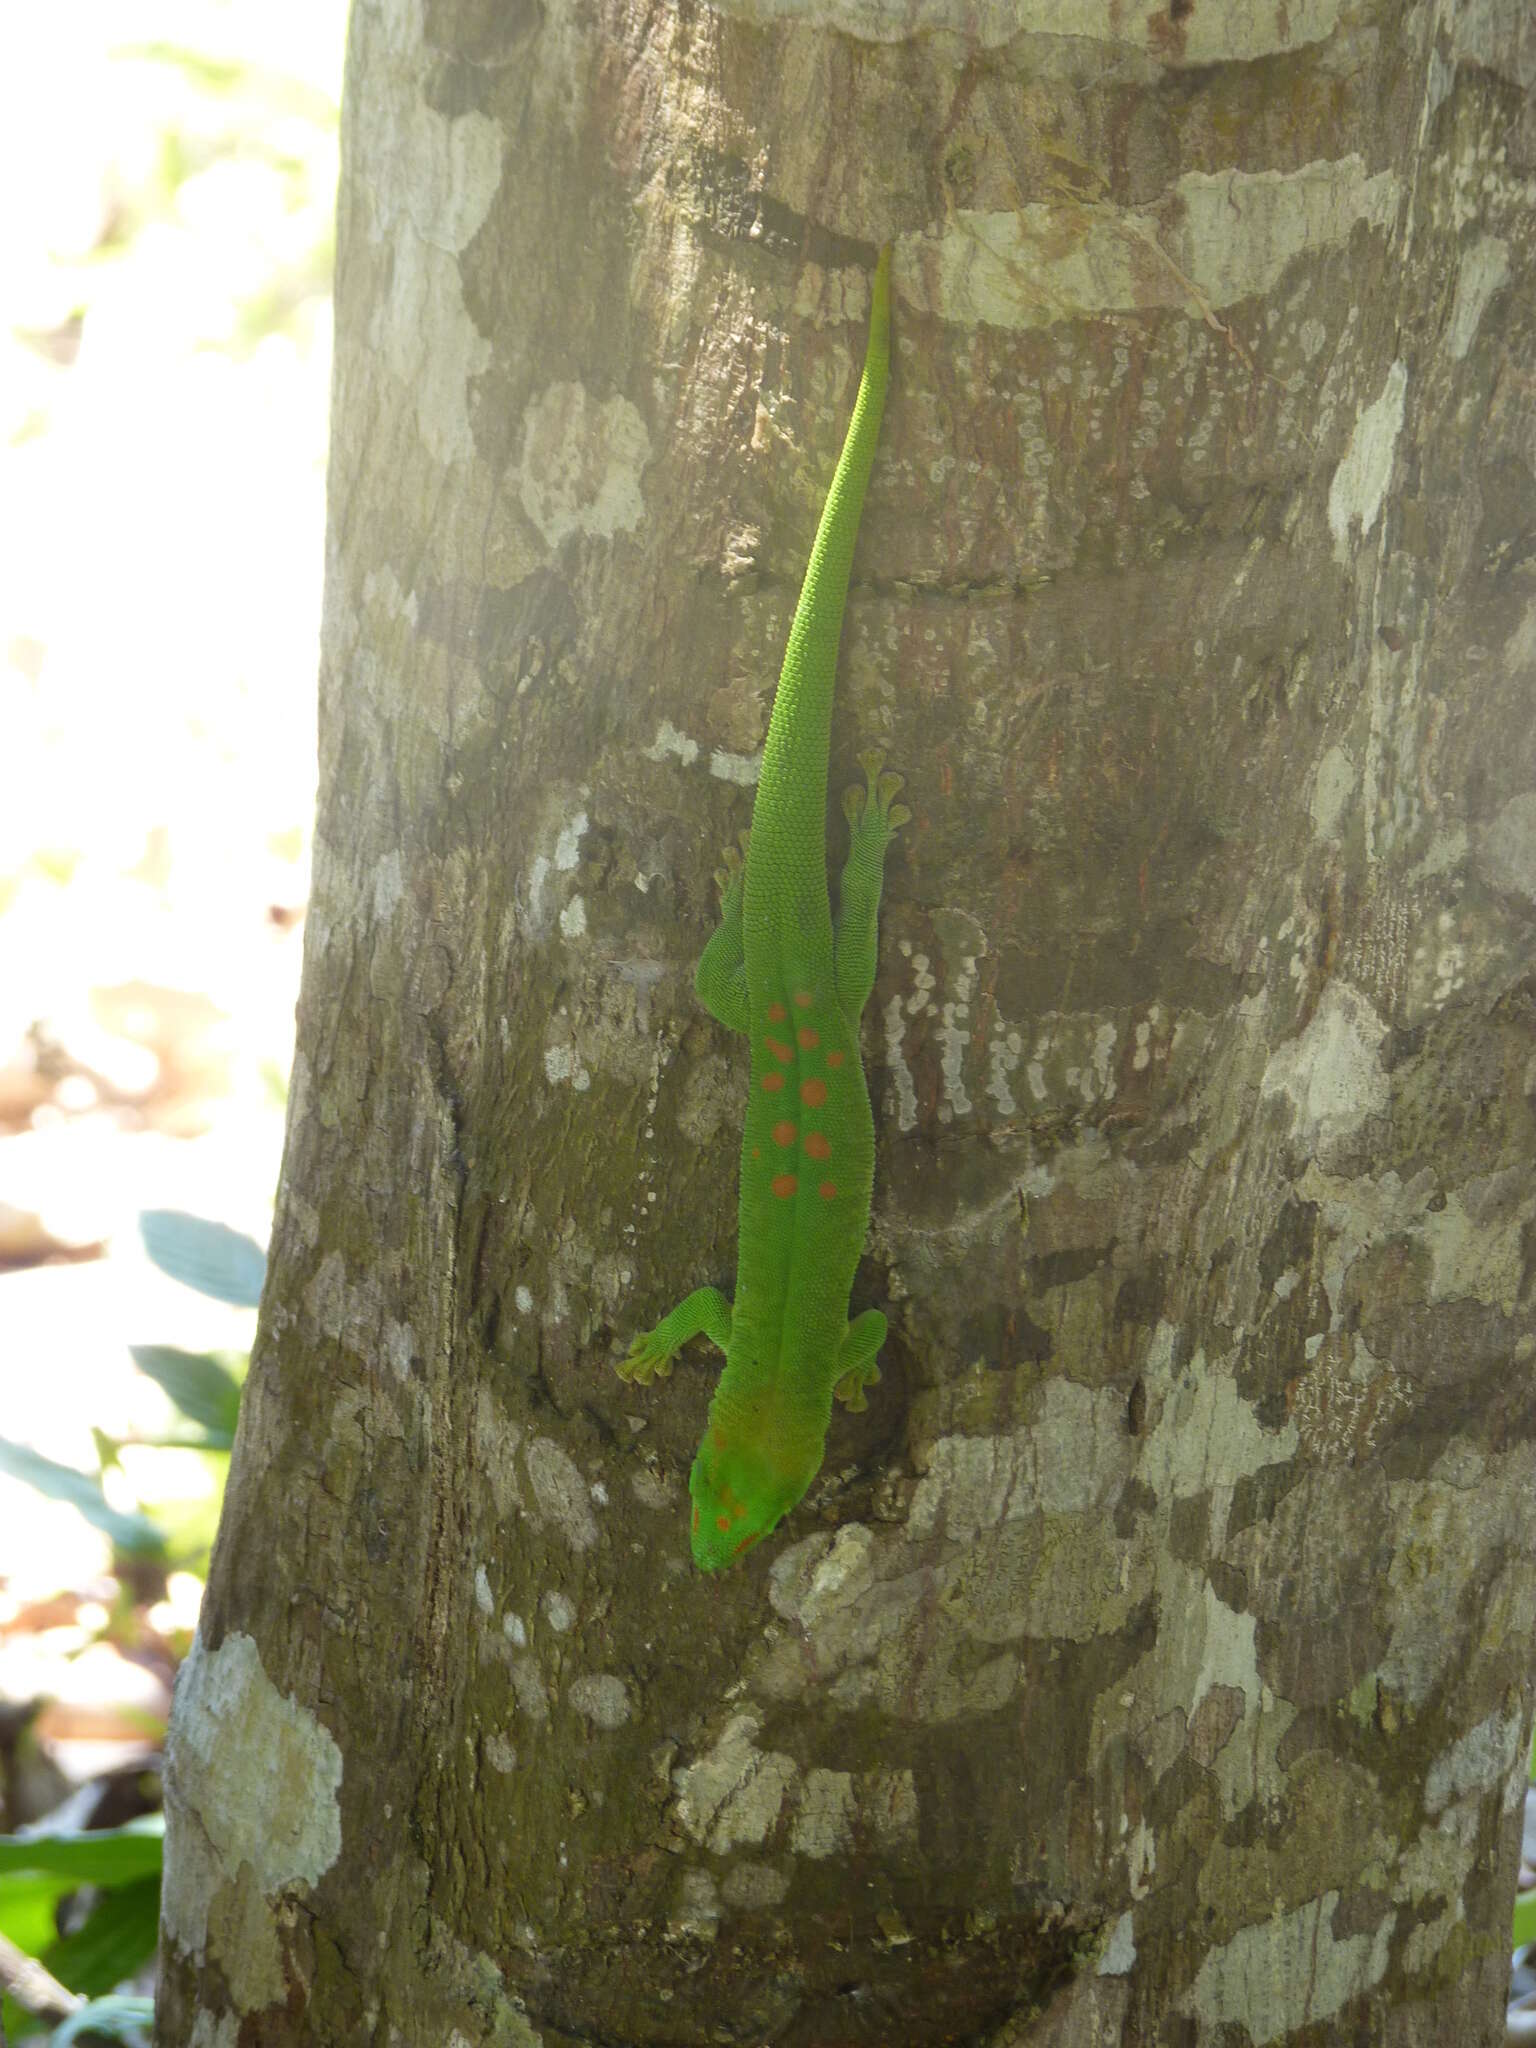 Image of Giant Madagascar Day Gecko